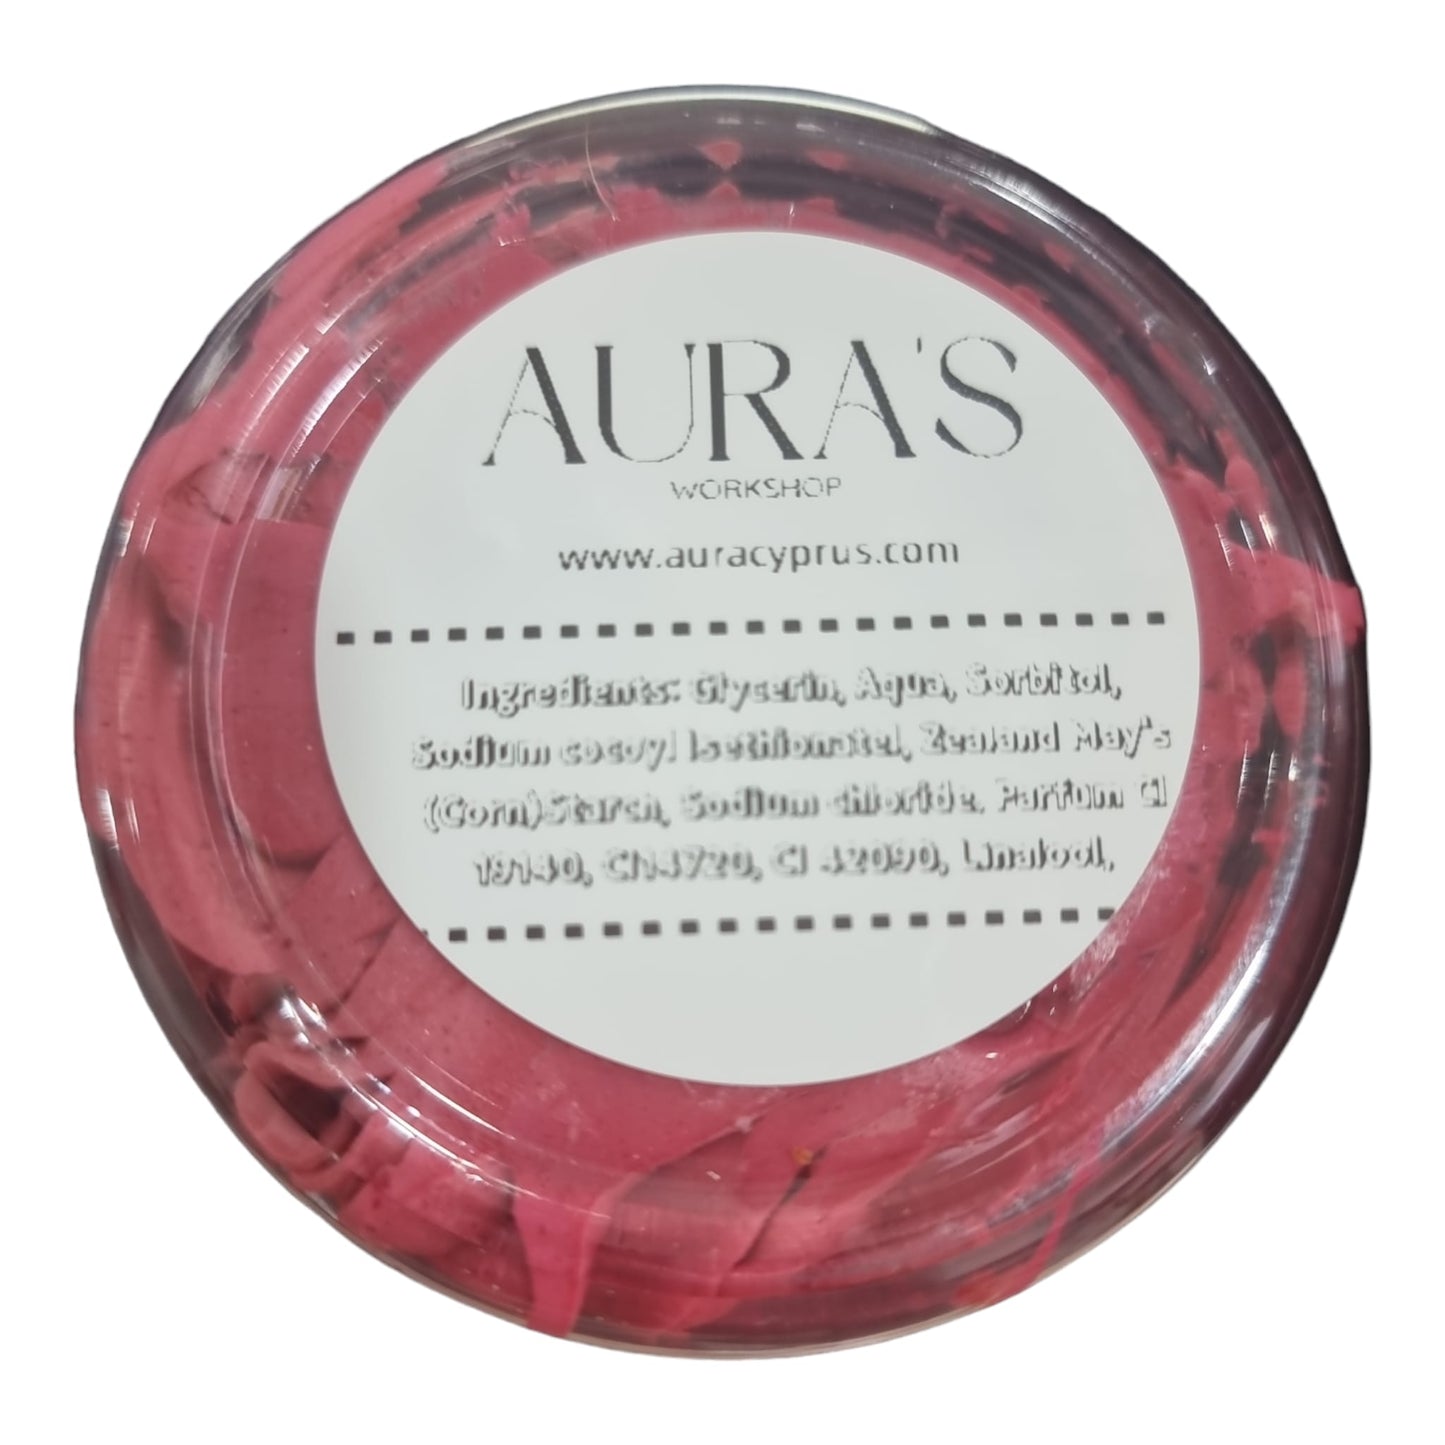 Strawberry Kiwi Whipped Soap - Auras Workshop  -   -   - Cyprus & Greece - Wholesale - Retail #